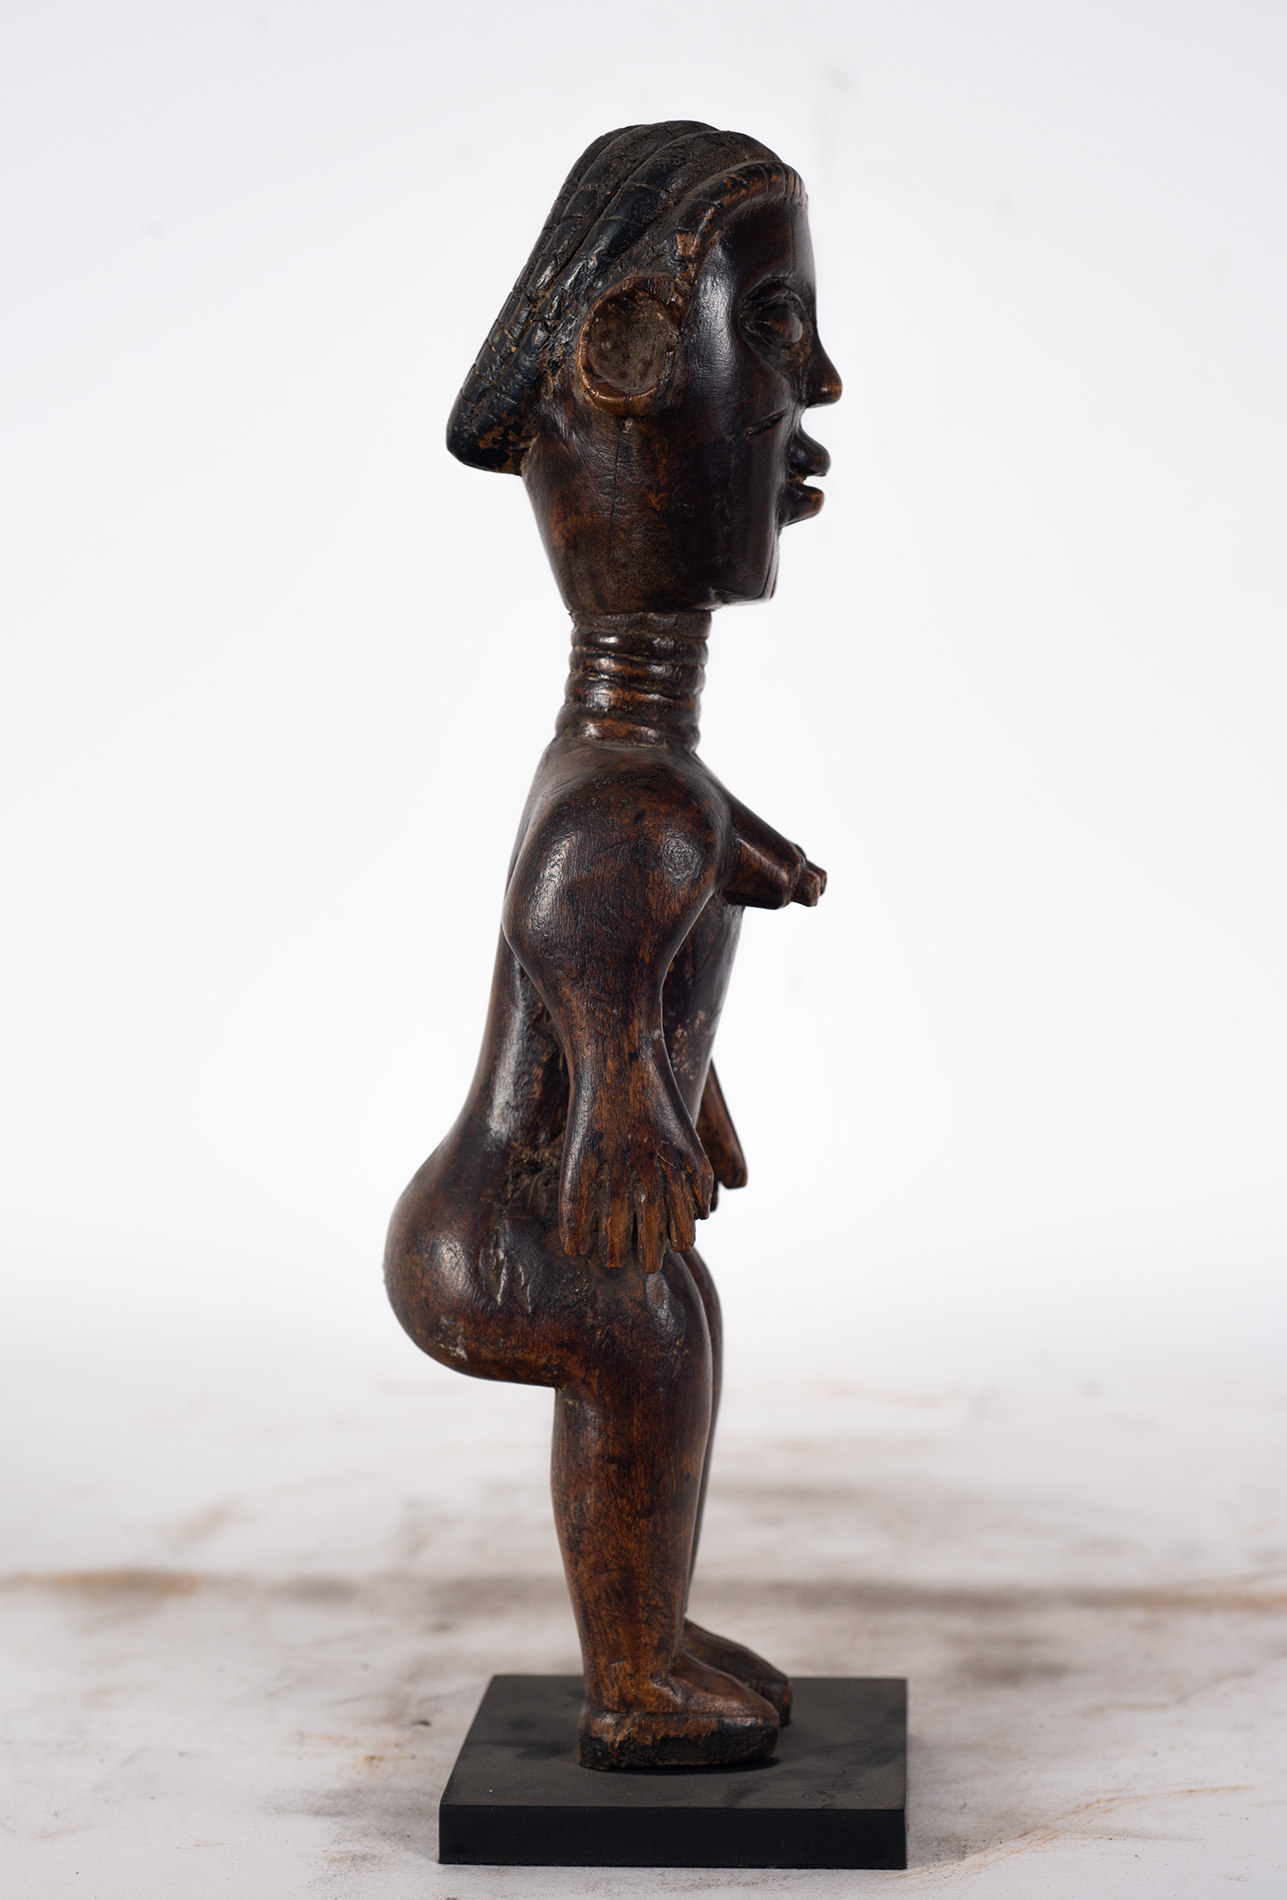 Guro Sculpture, Ivory Coast - Image 5 of 7